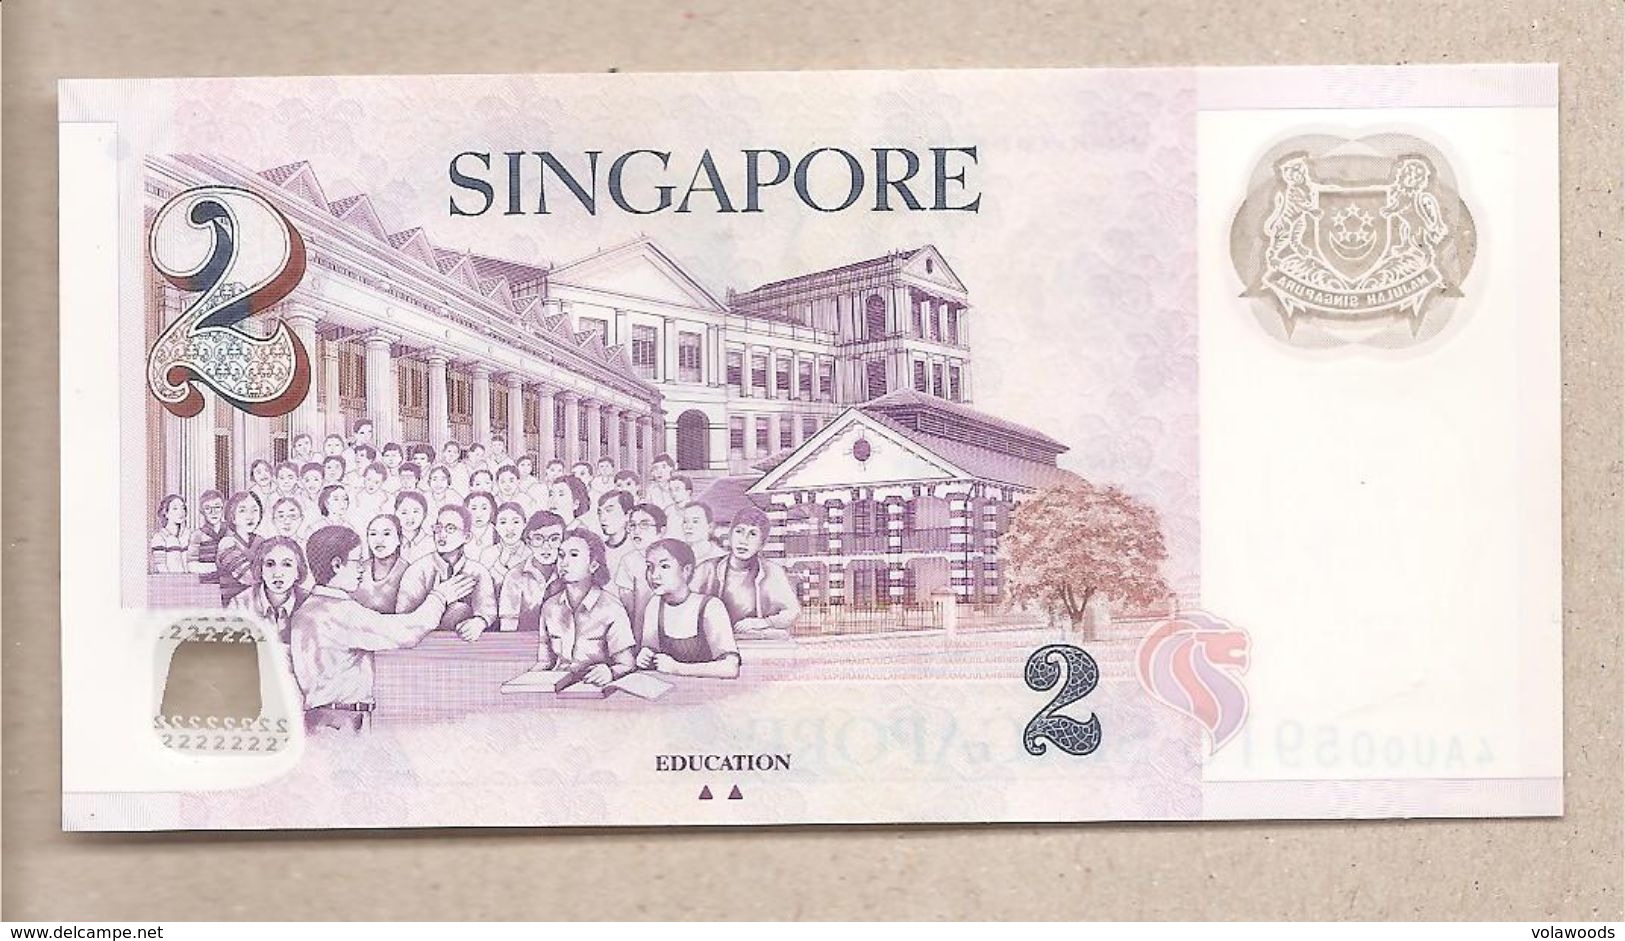 Singapore - Banconota Circolata QFdS Da 2 Dollari - P-46e - 2011 - Singapore